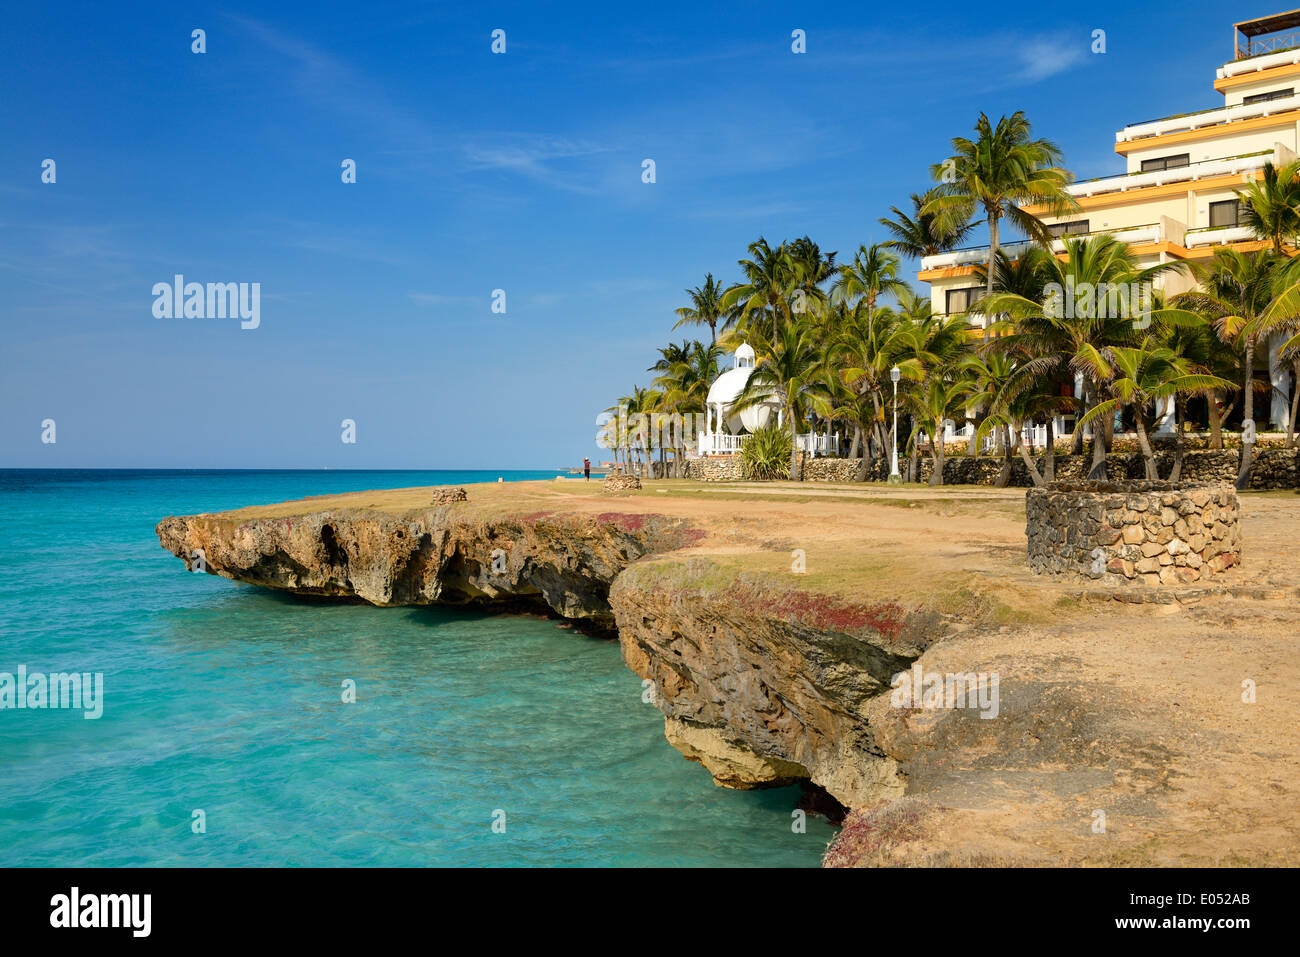 La pierre de lave la rive avec blow hole wells à Varadero Matanzas Cuba resort l'eau turquoise de l'océan Atlantique Banque D'Images